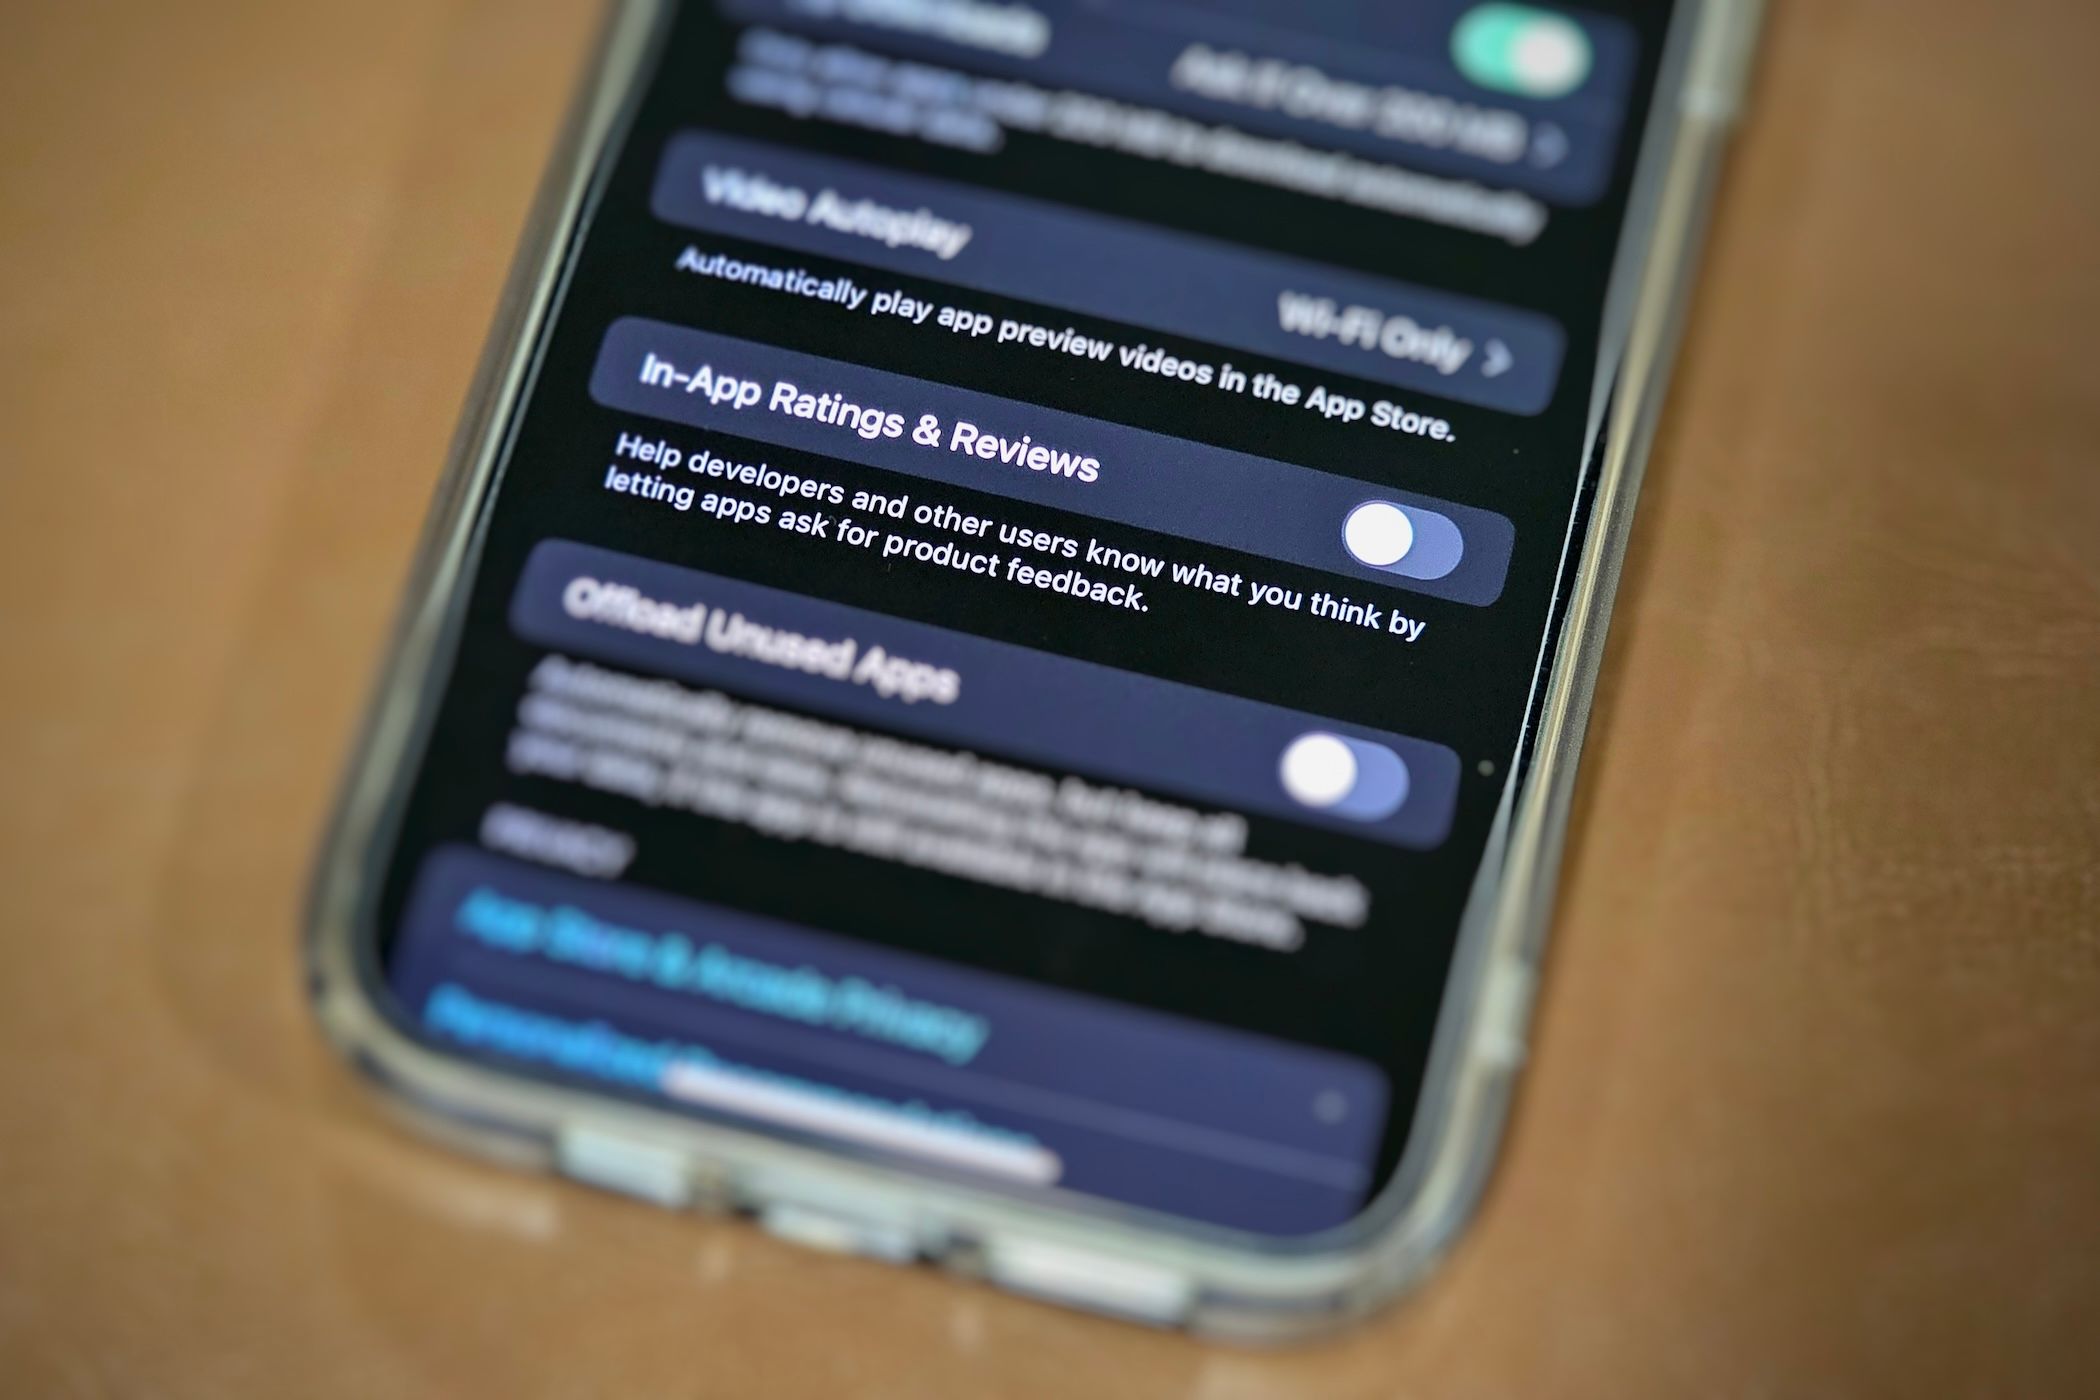 In-App Ratings & Reviews option in iPhone Settings.